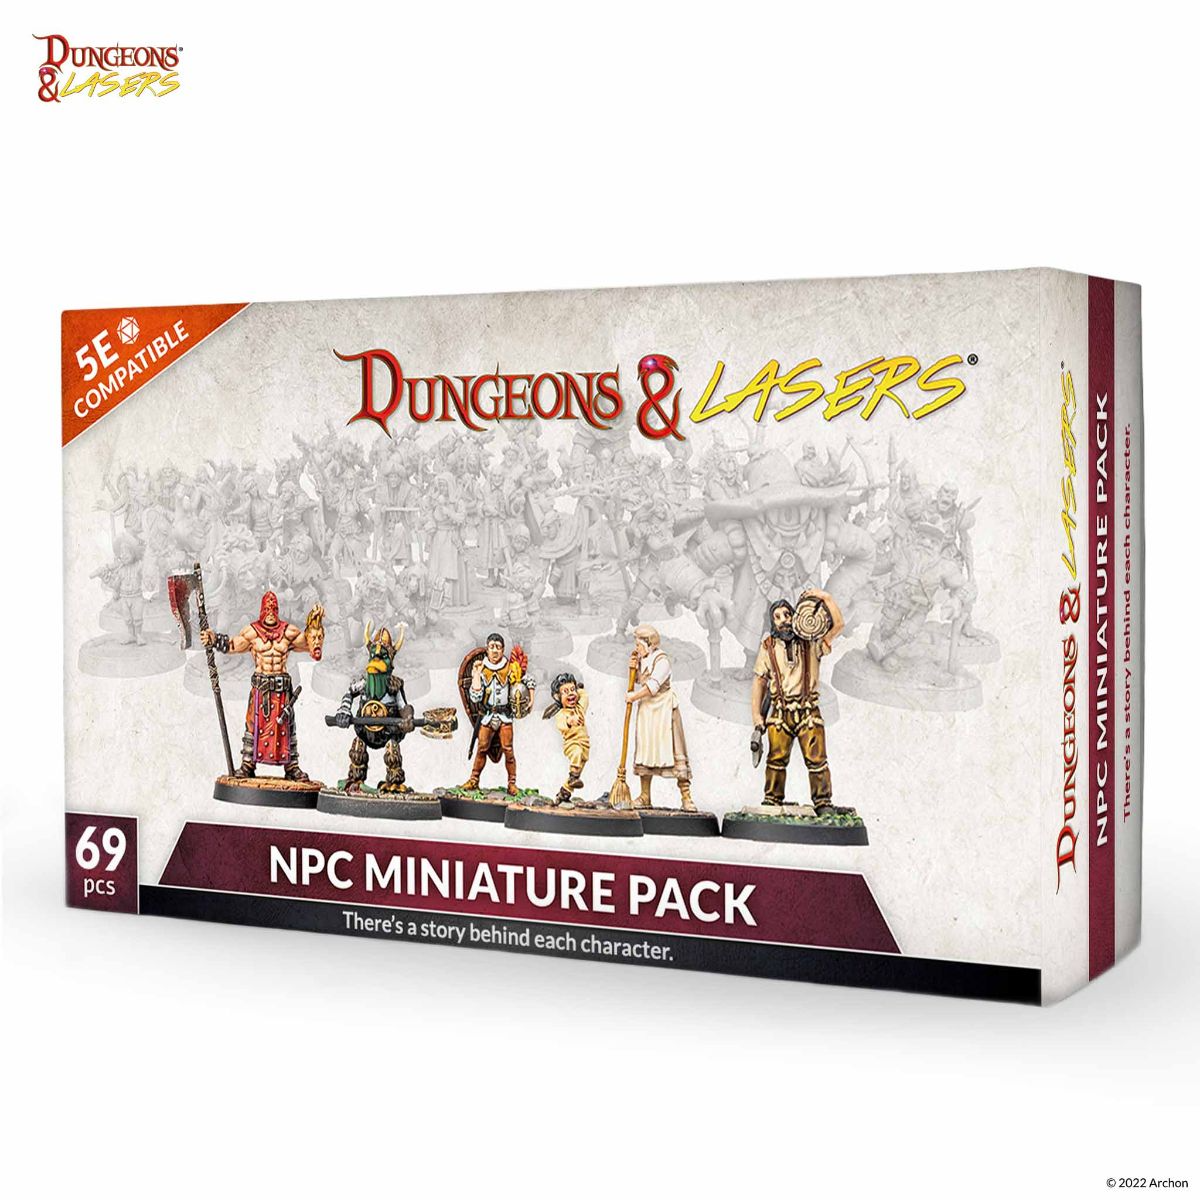 Dungeons & Lasers NPCs Miniature Pack